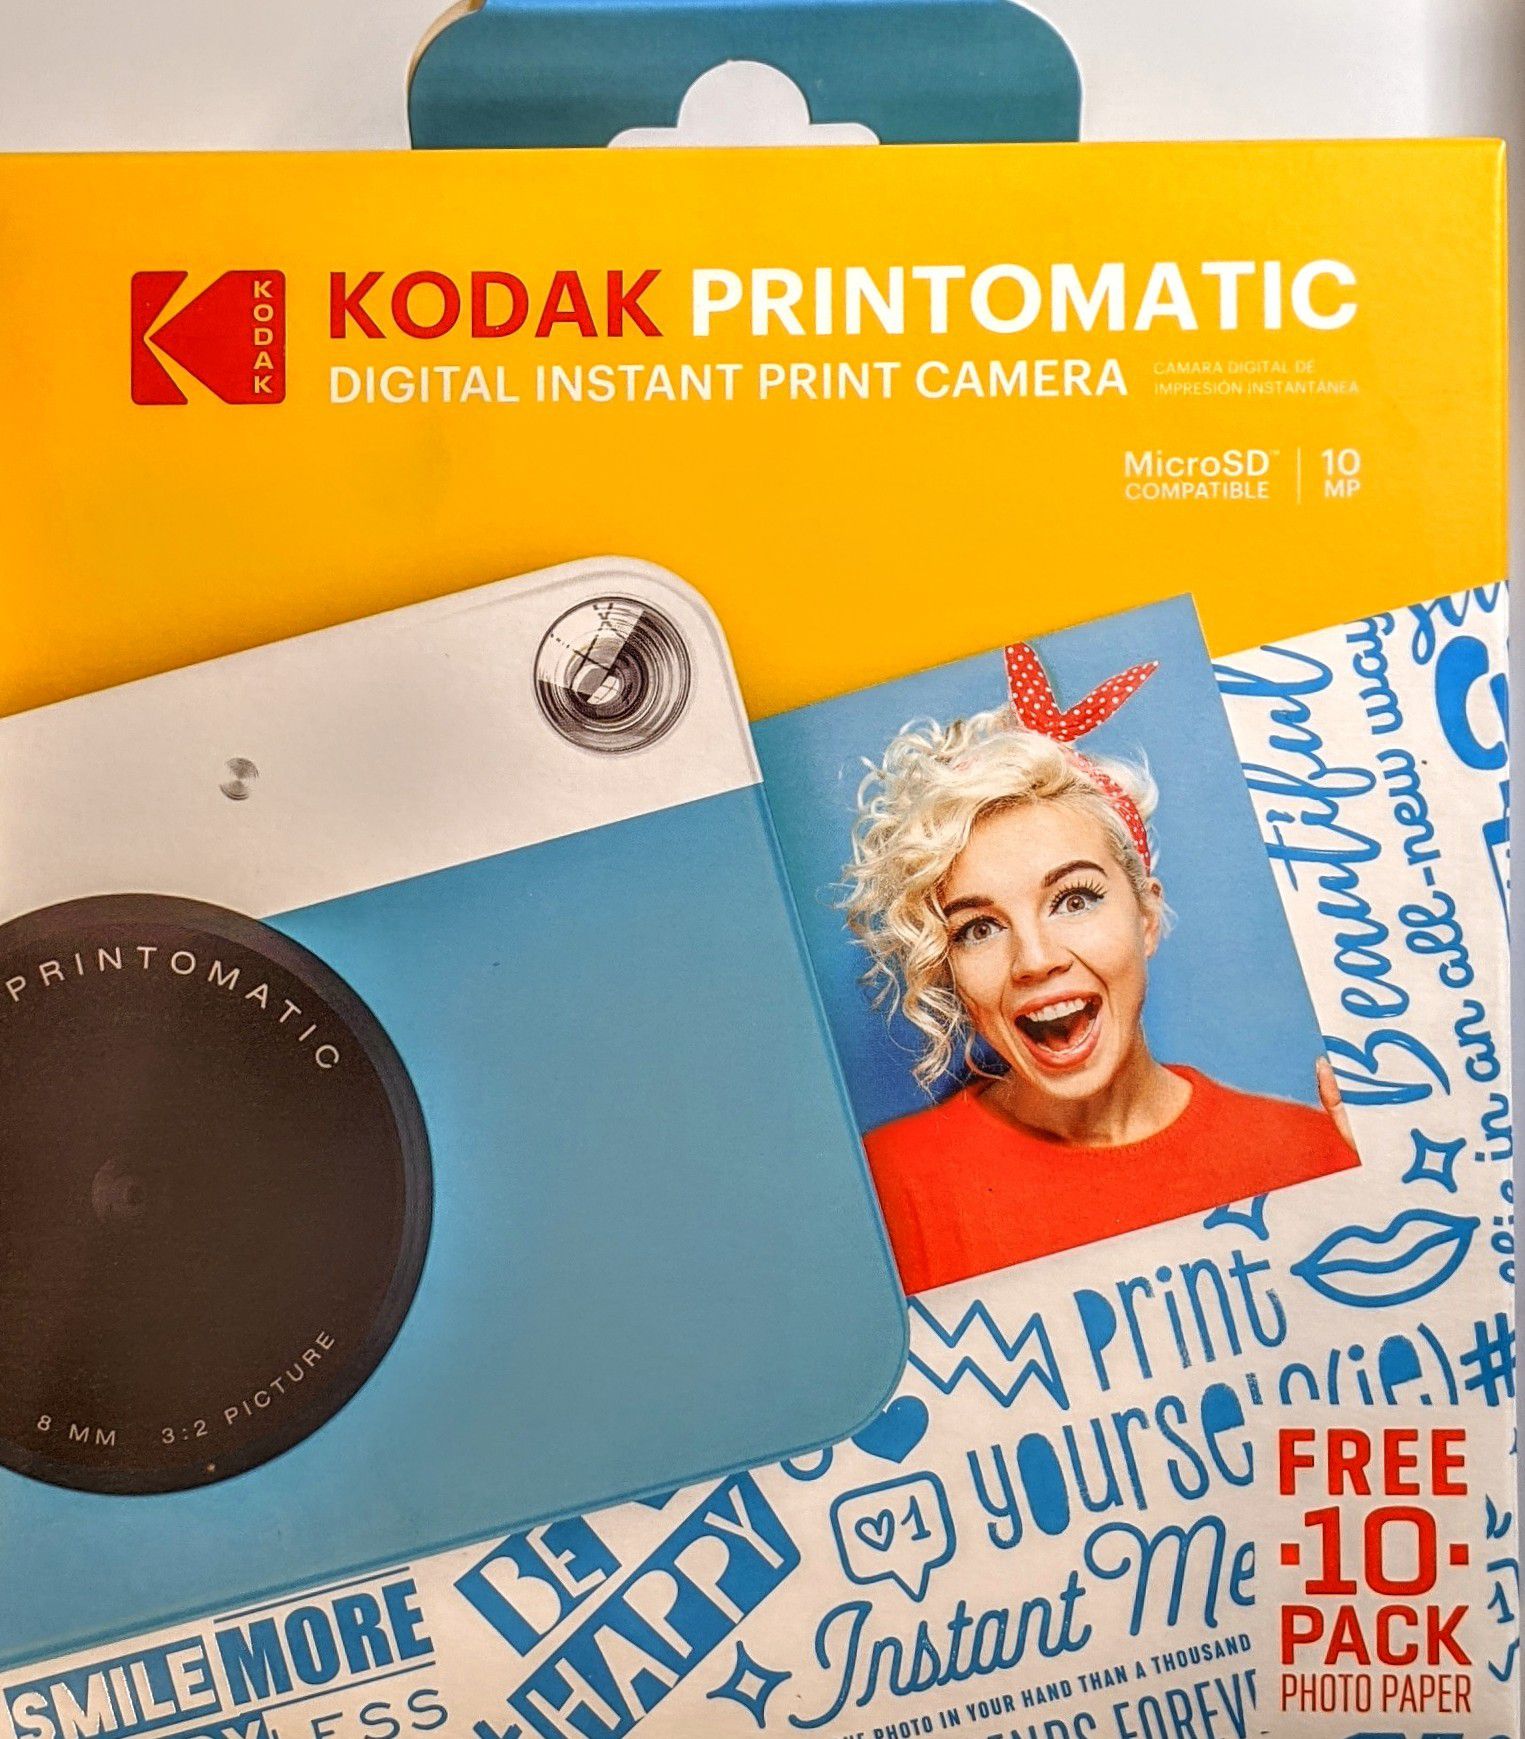 Kodak Printomatic Digital Instant Print Camera (Blue), Full Color Prints on zink